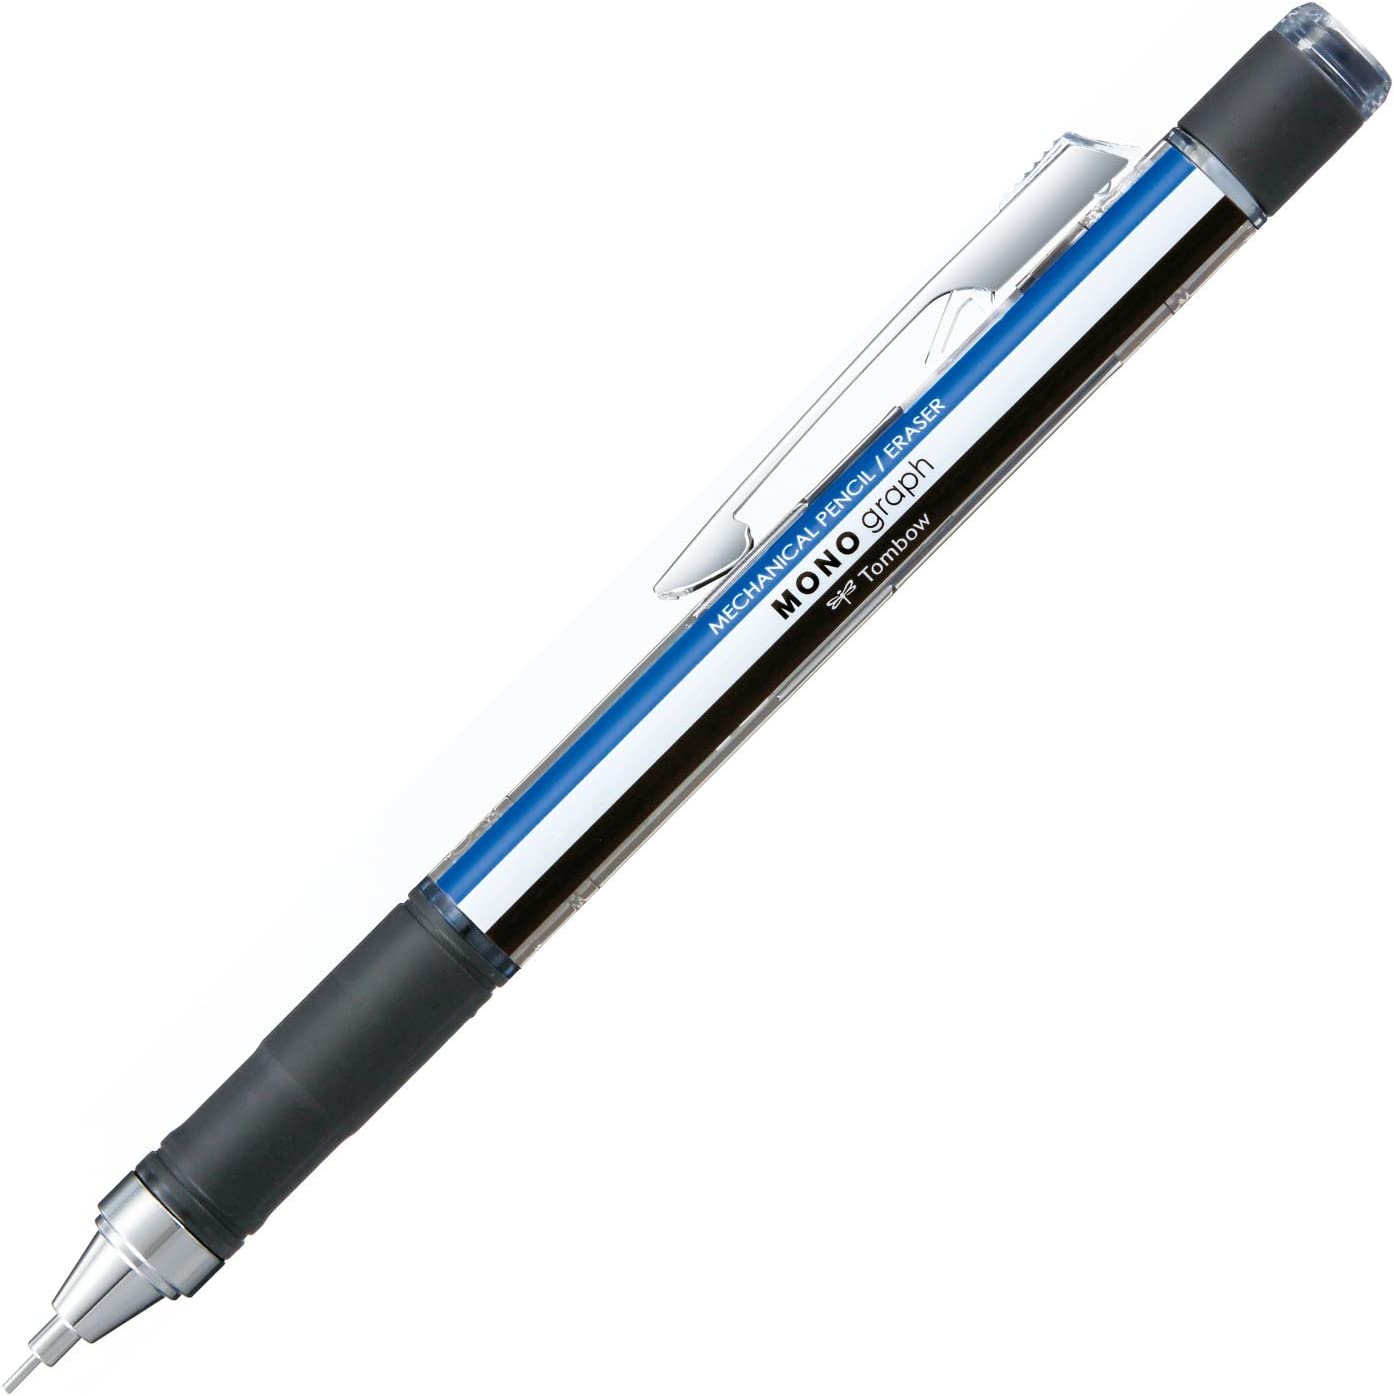 MONO Graph Mechanical Pencil 0.5mm